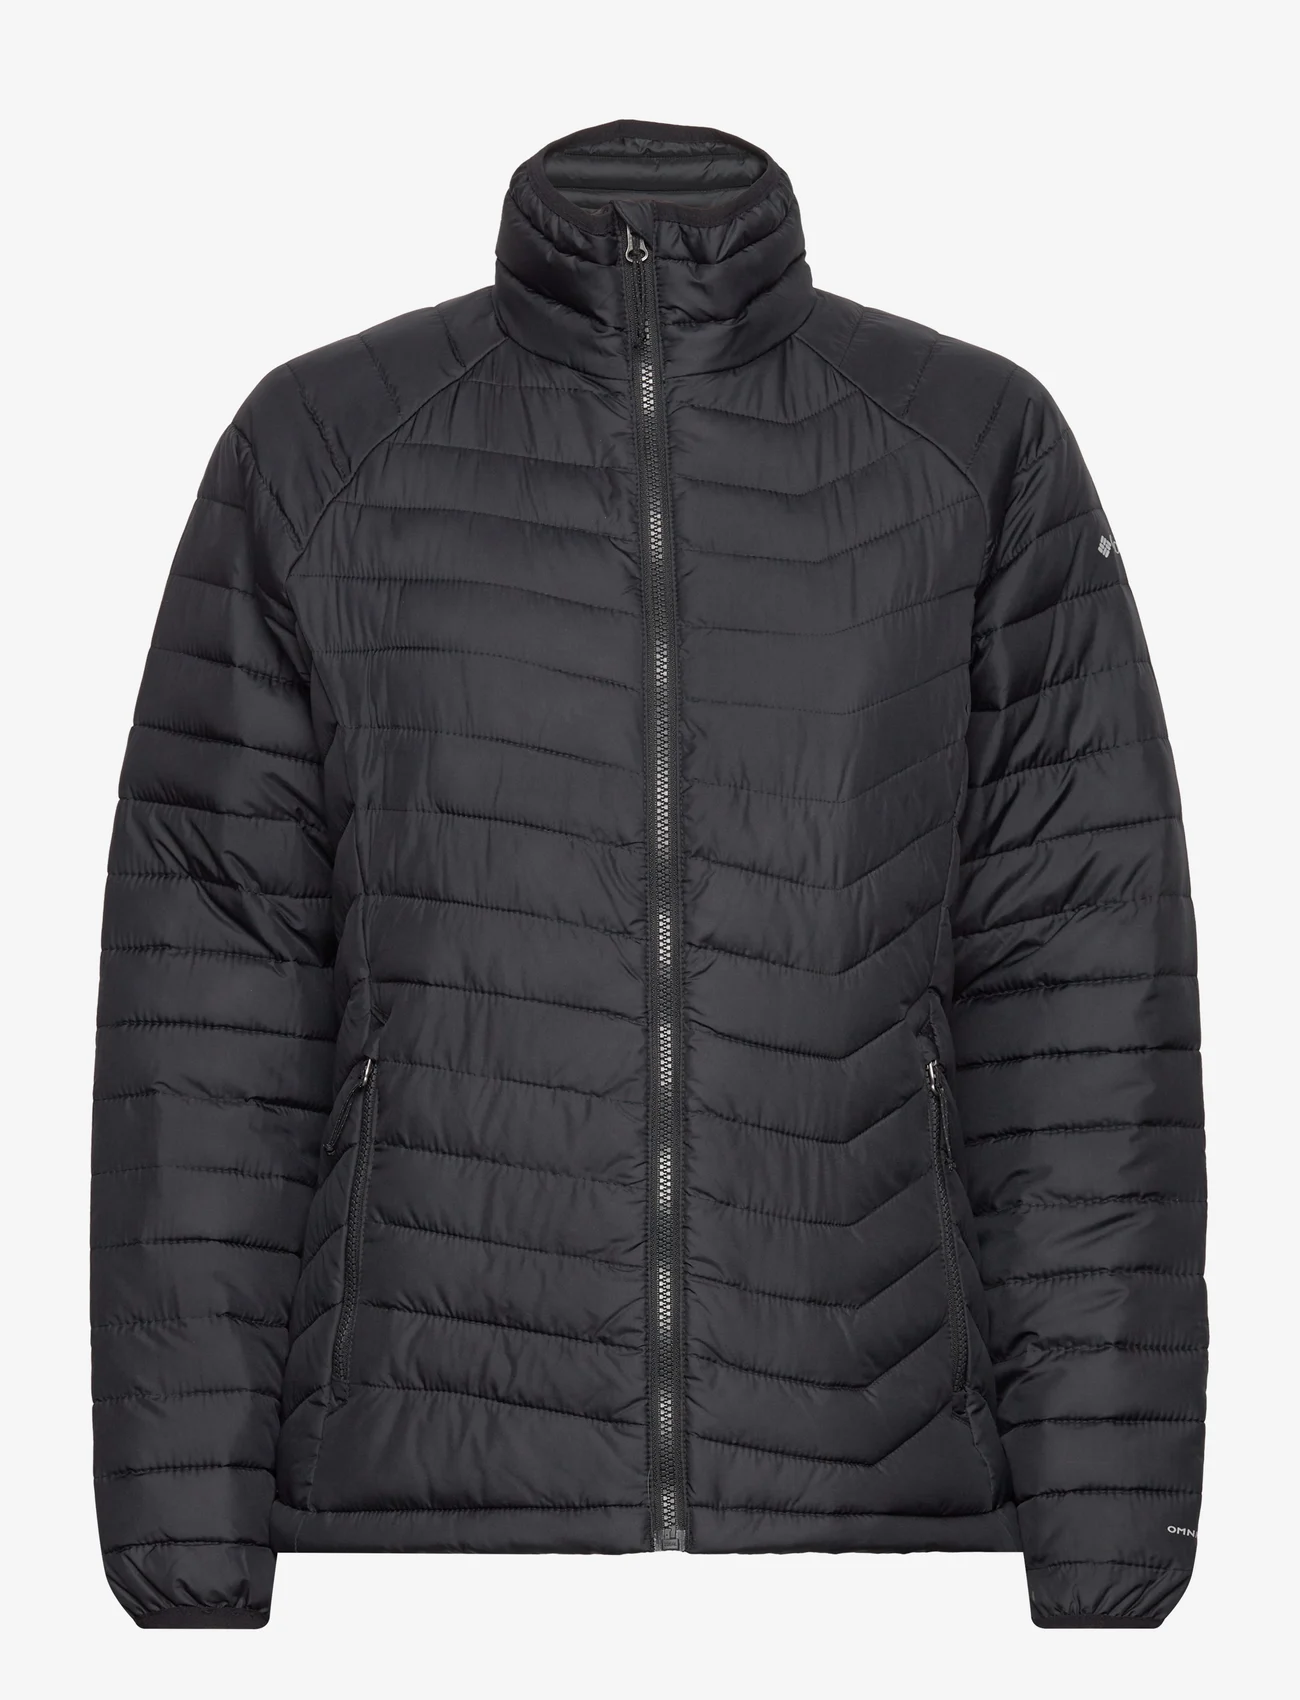 Columbia Sportswear - Powder Lite Jacket - down- & padded jackets - black - 0